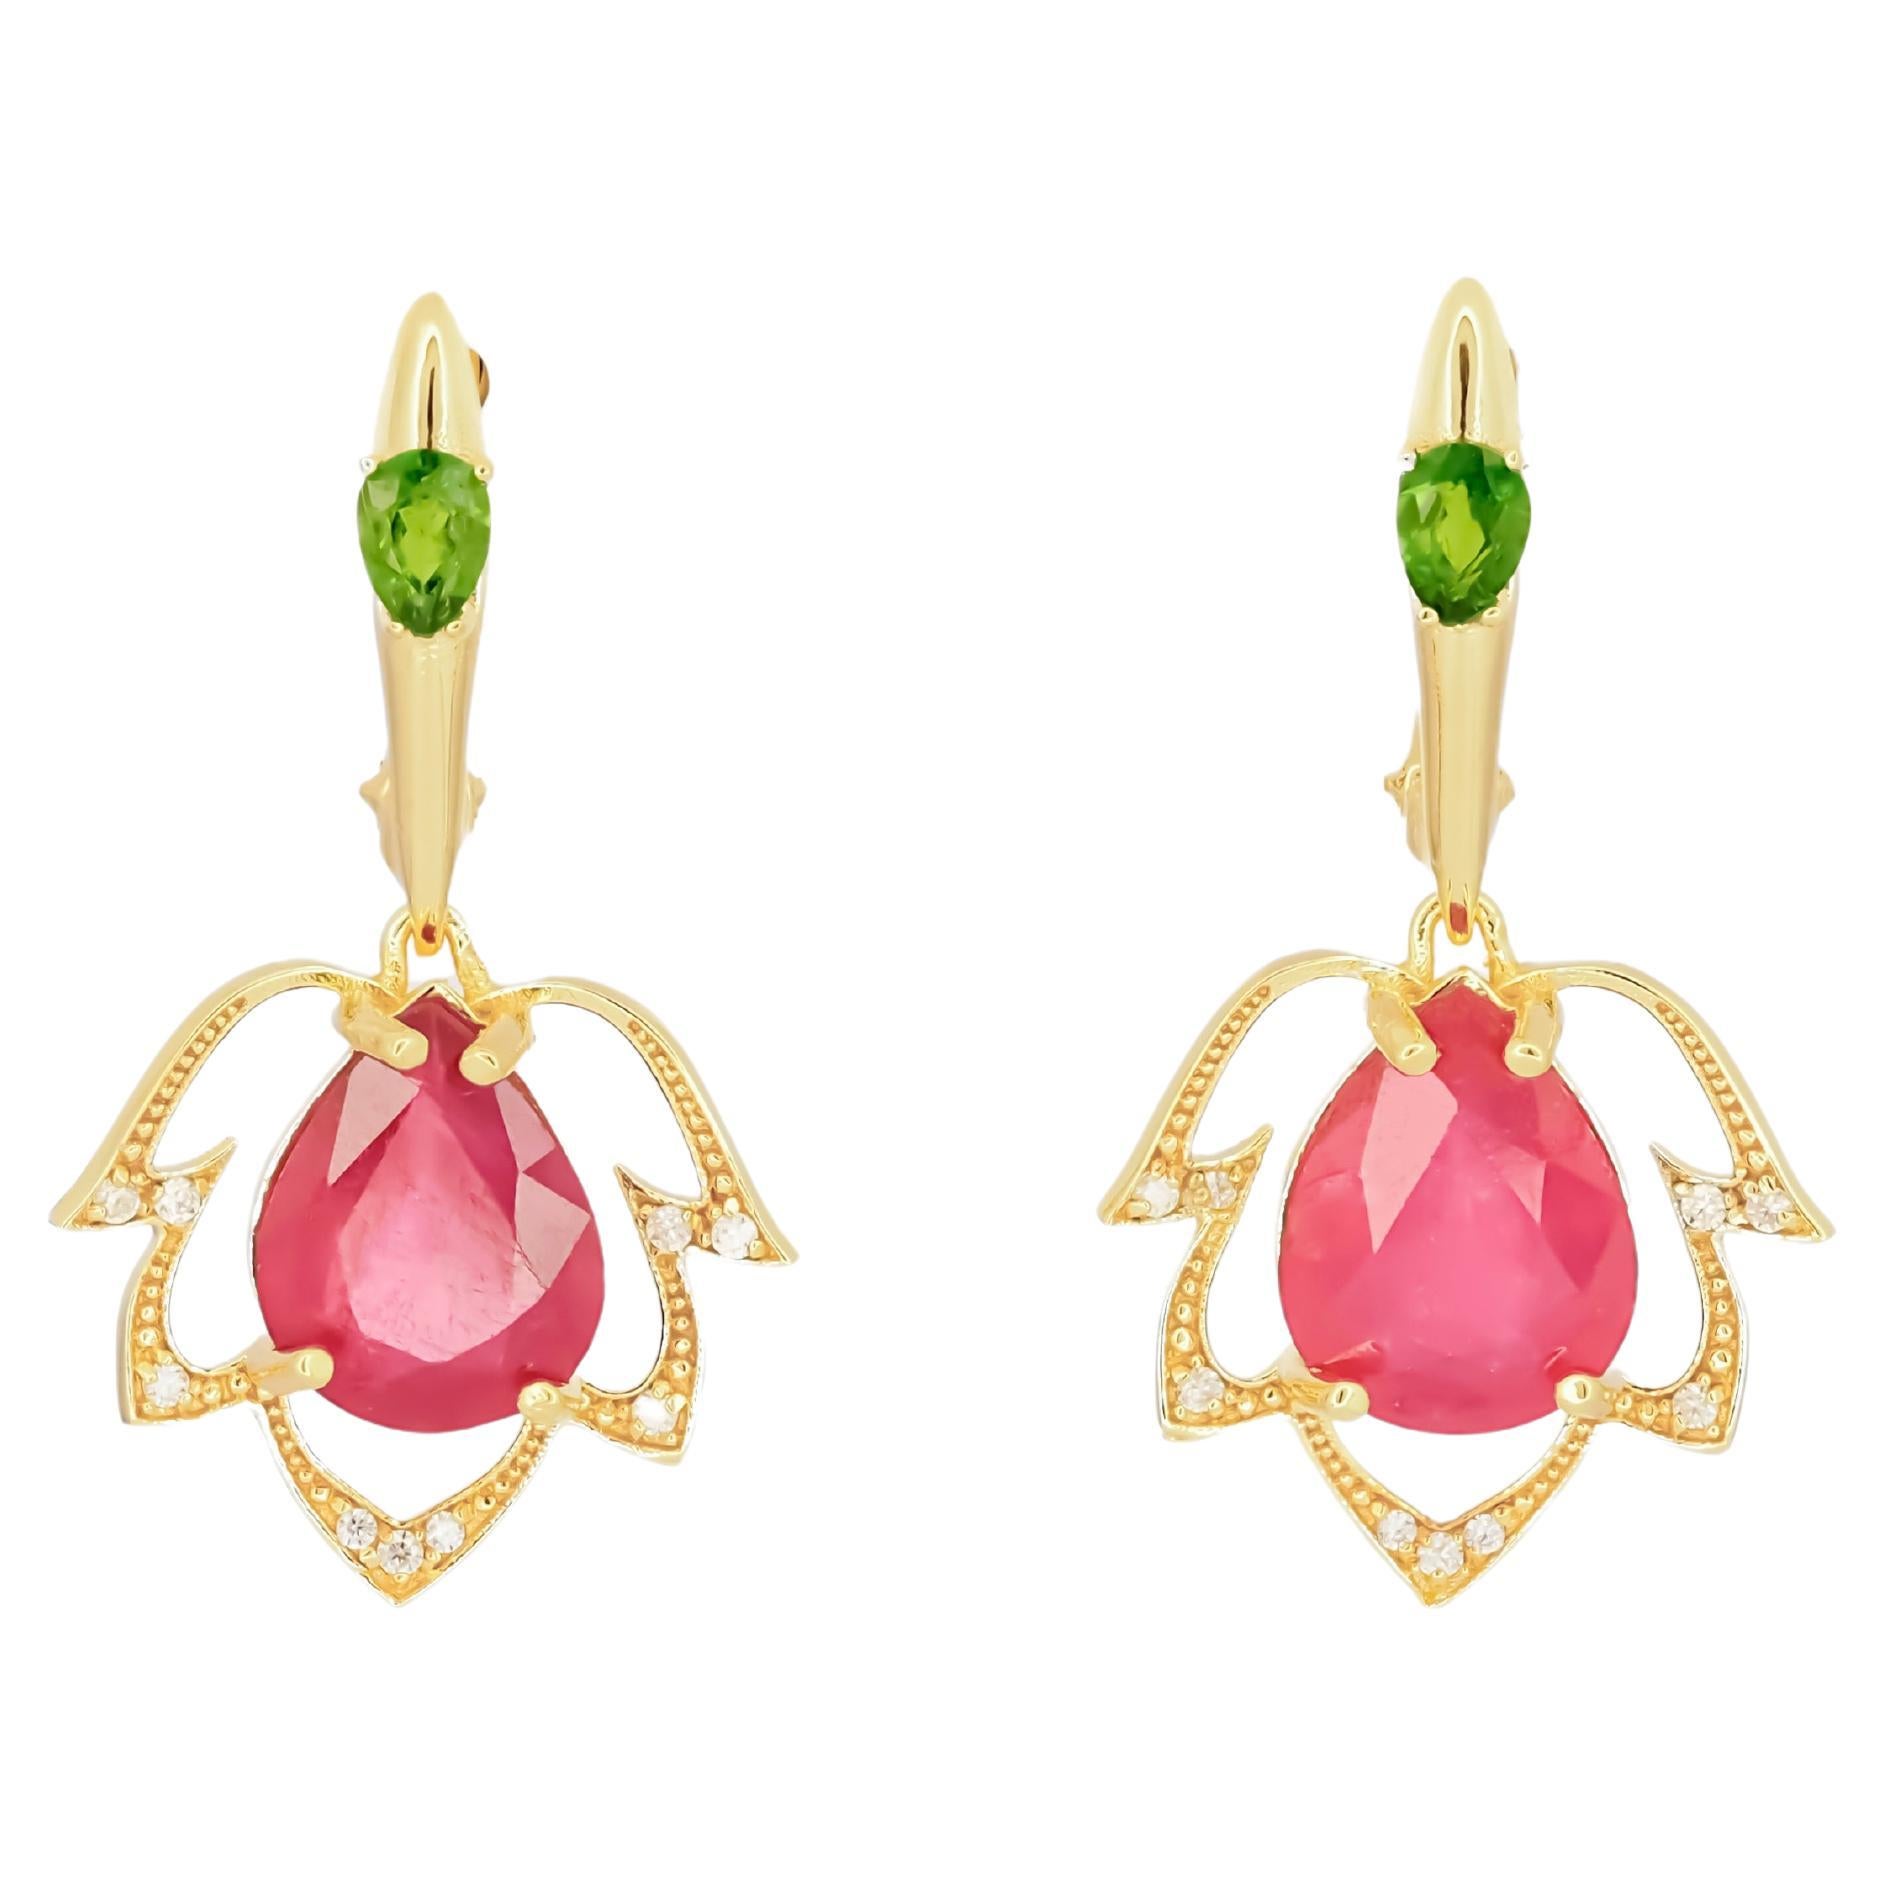 Pear ruby flower 14k gold earrings. For Sale